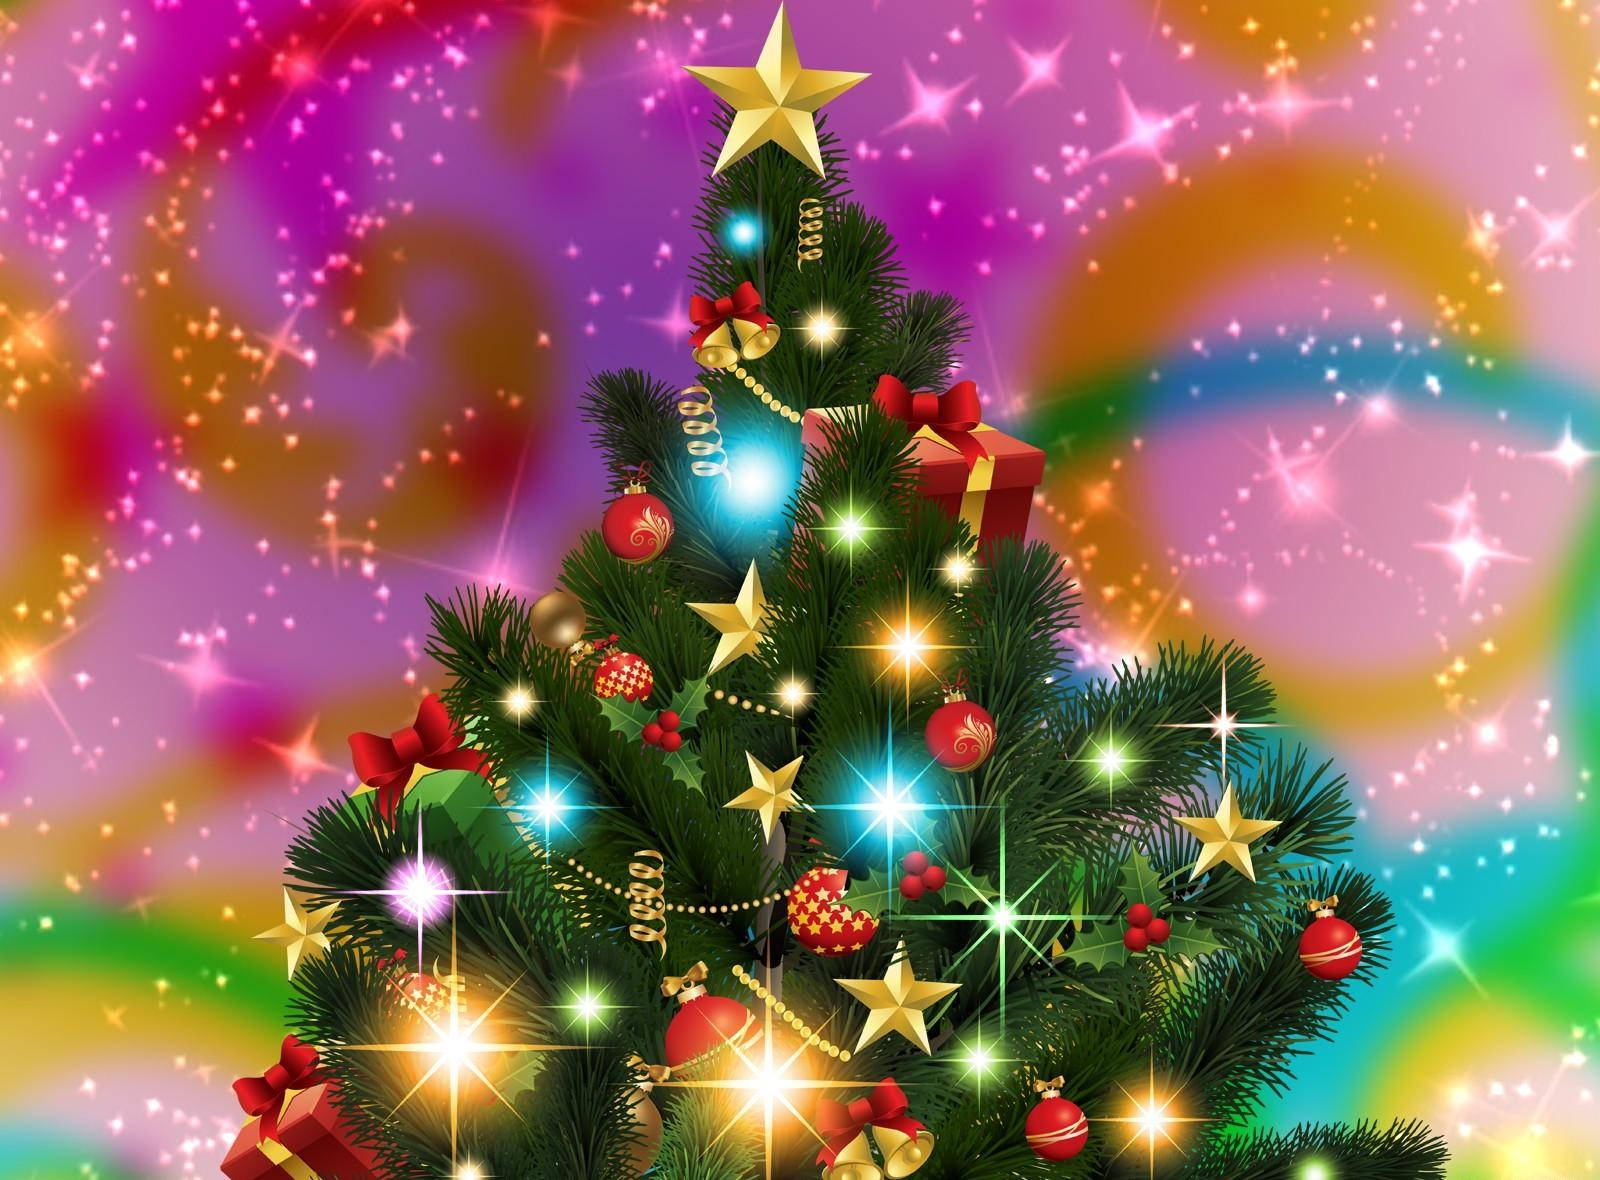 Colorful Christmas Tree Holiday Digital Art Wallpaper